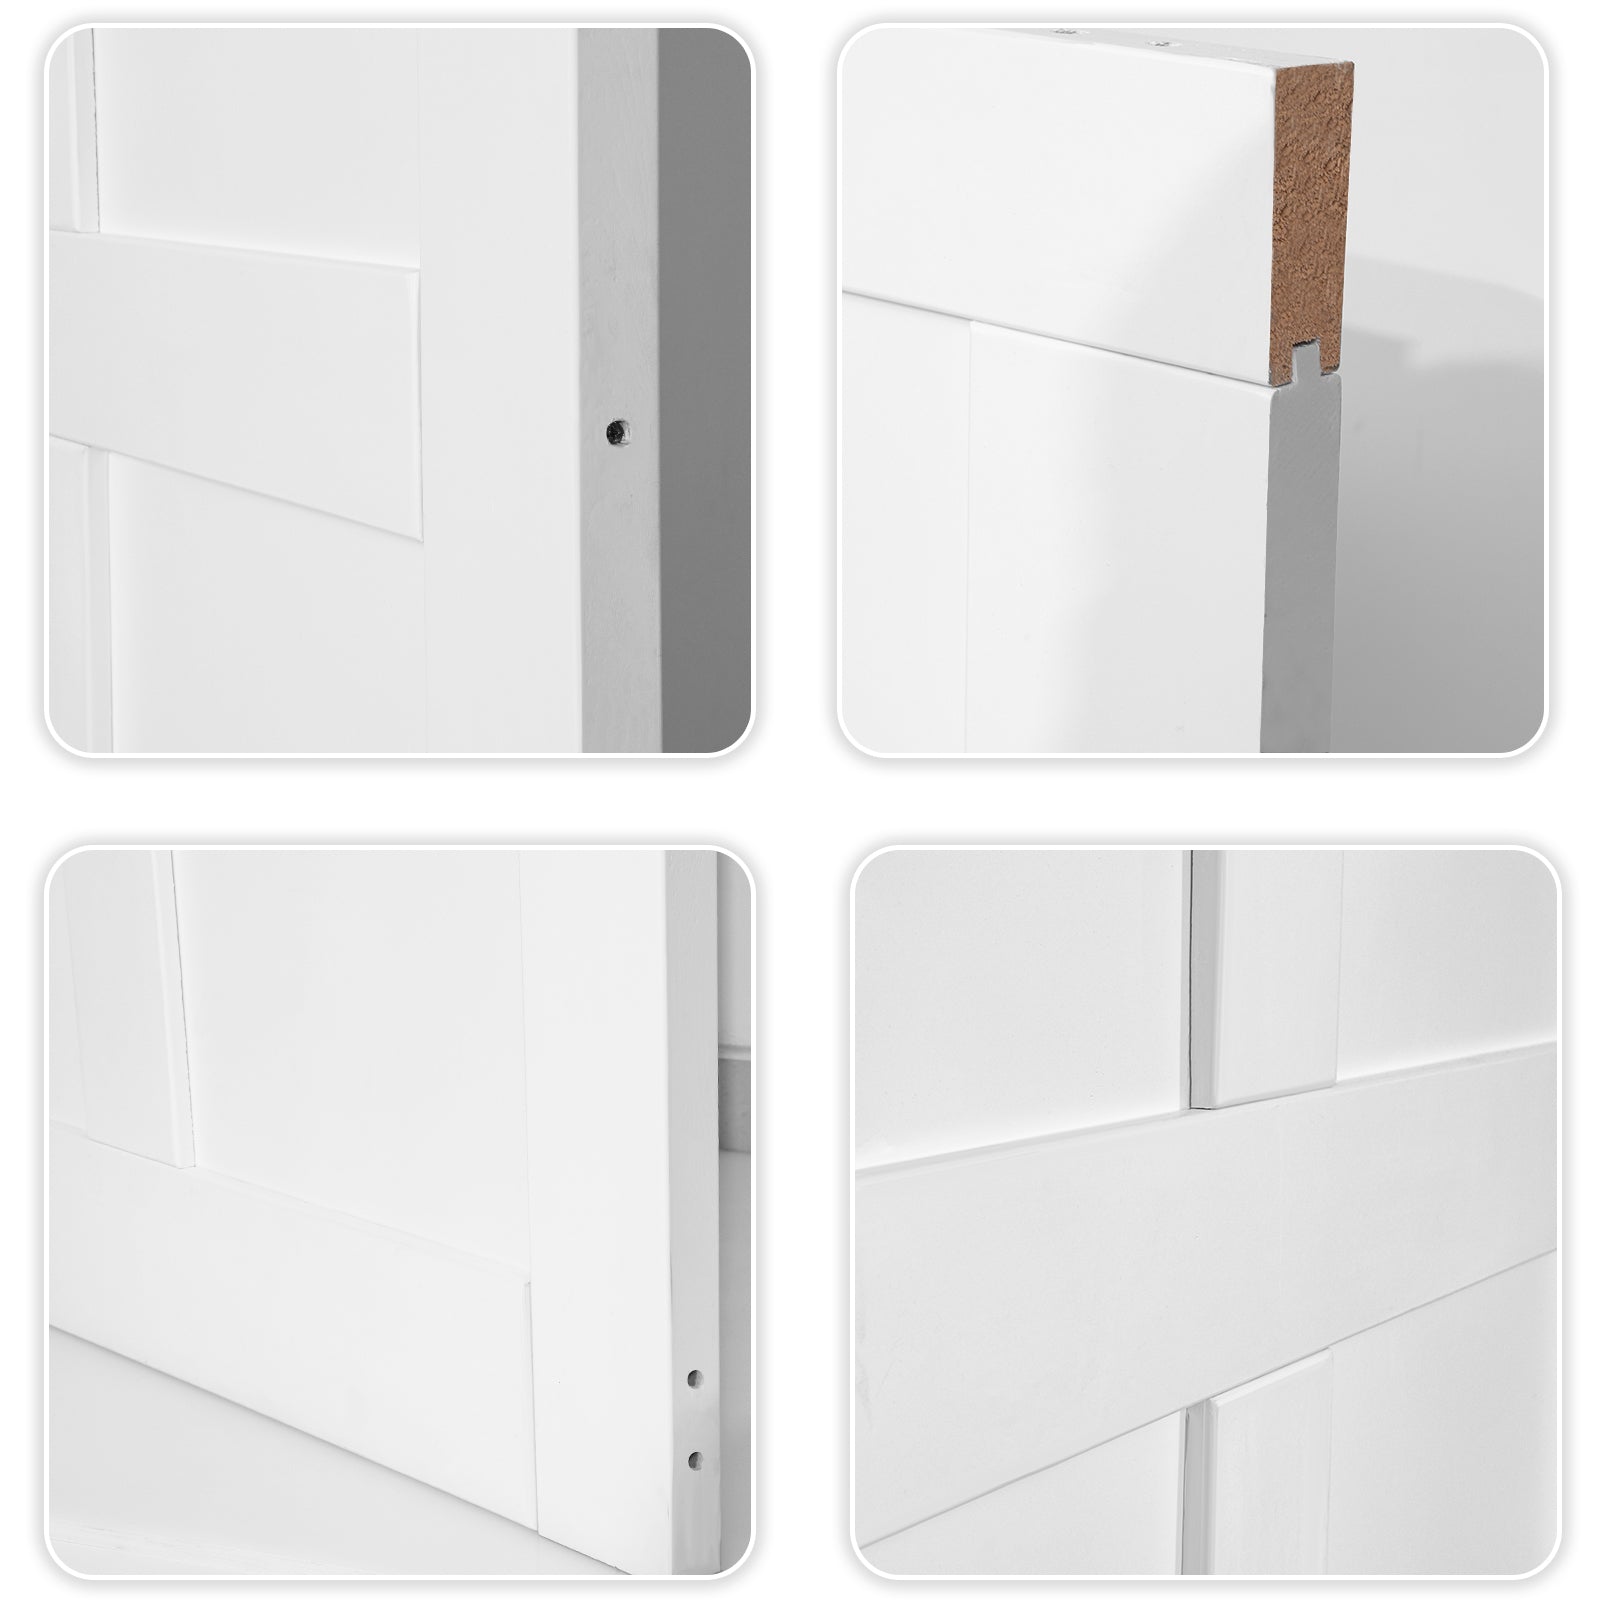 24" x 80" Five Panel Real Primed Door Slab white-mdf